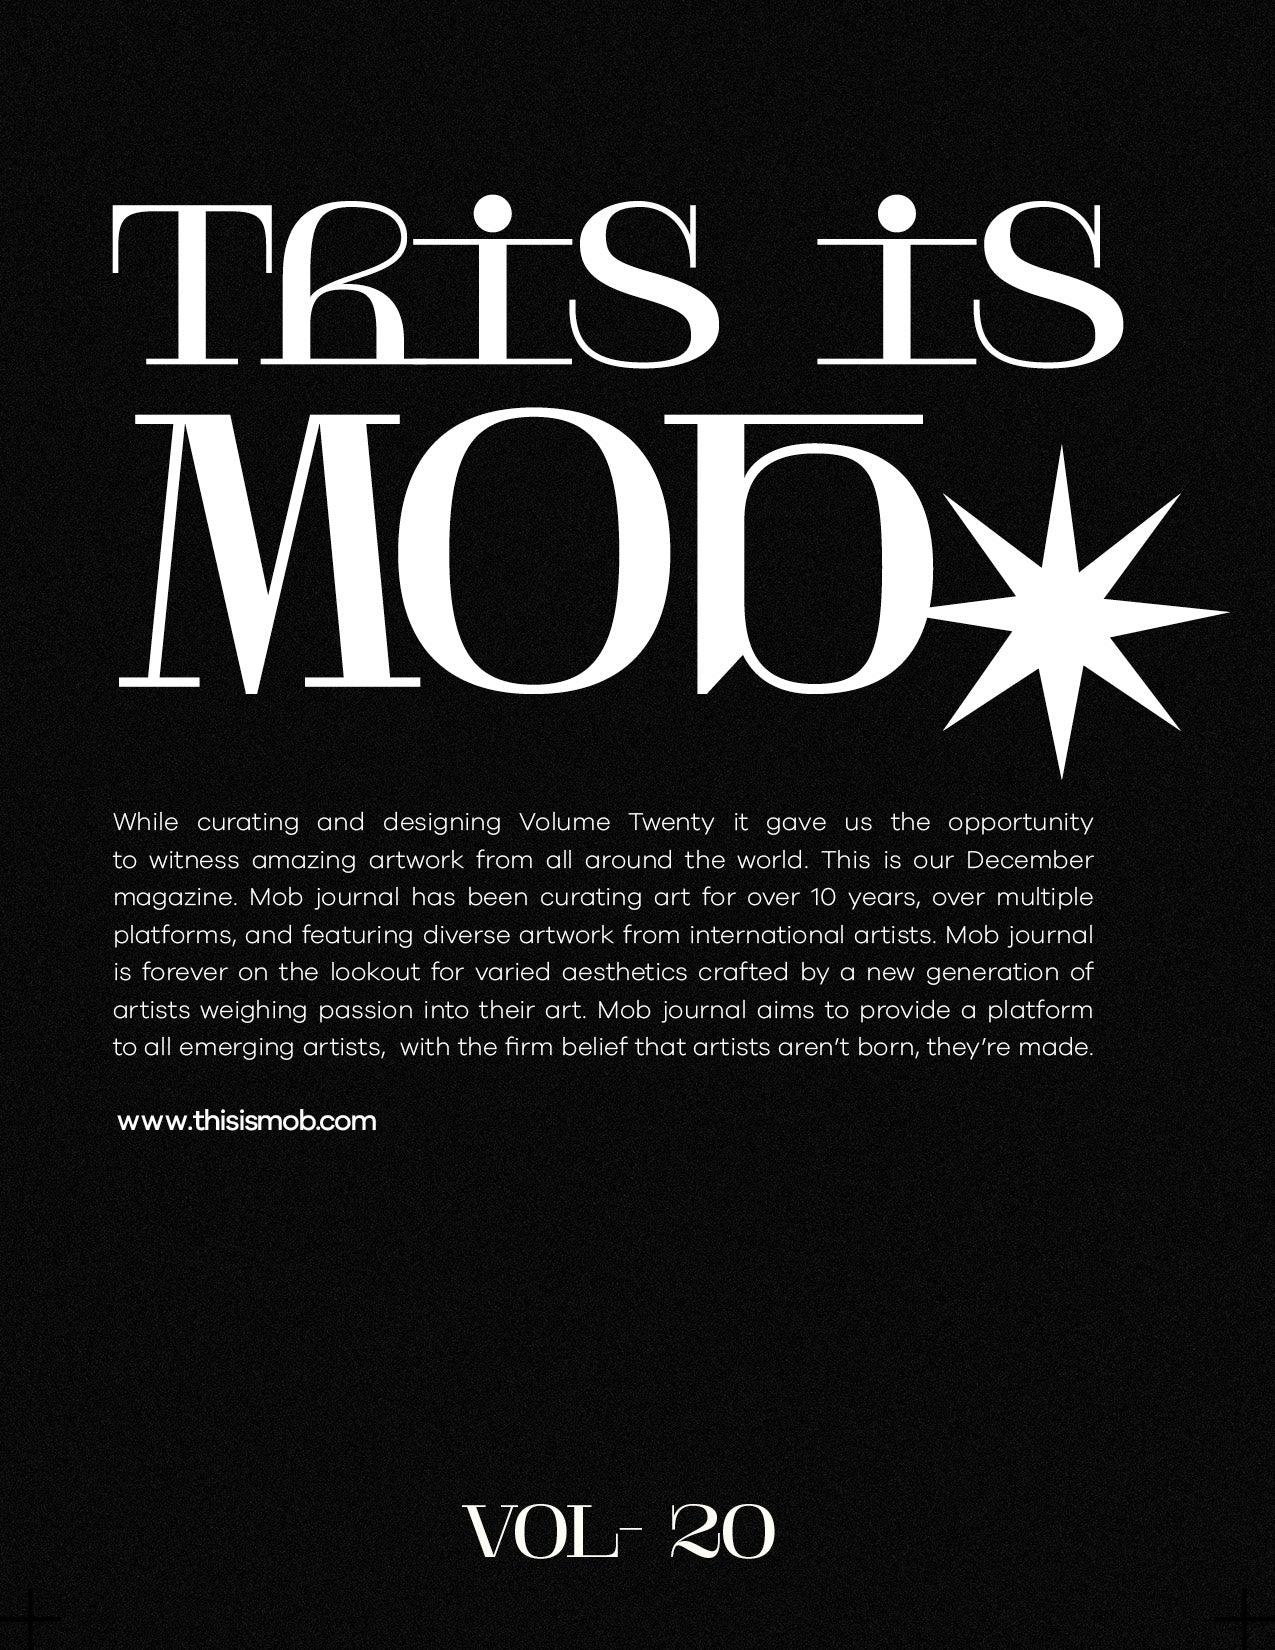 MOB JOURNAL | VOLUME TWENTY | ISSUE #32 - Mob Journal